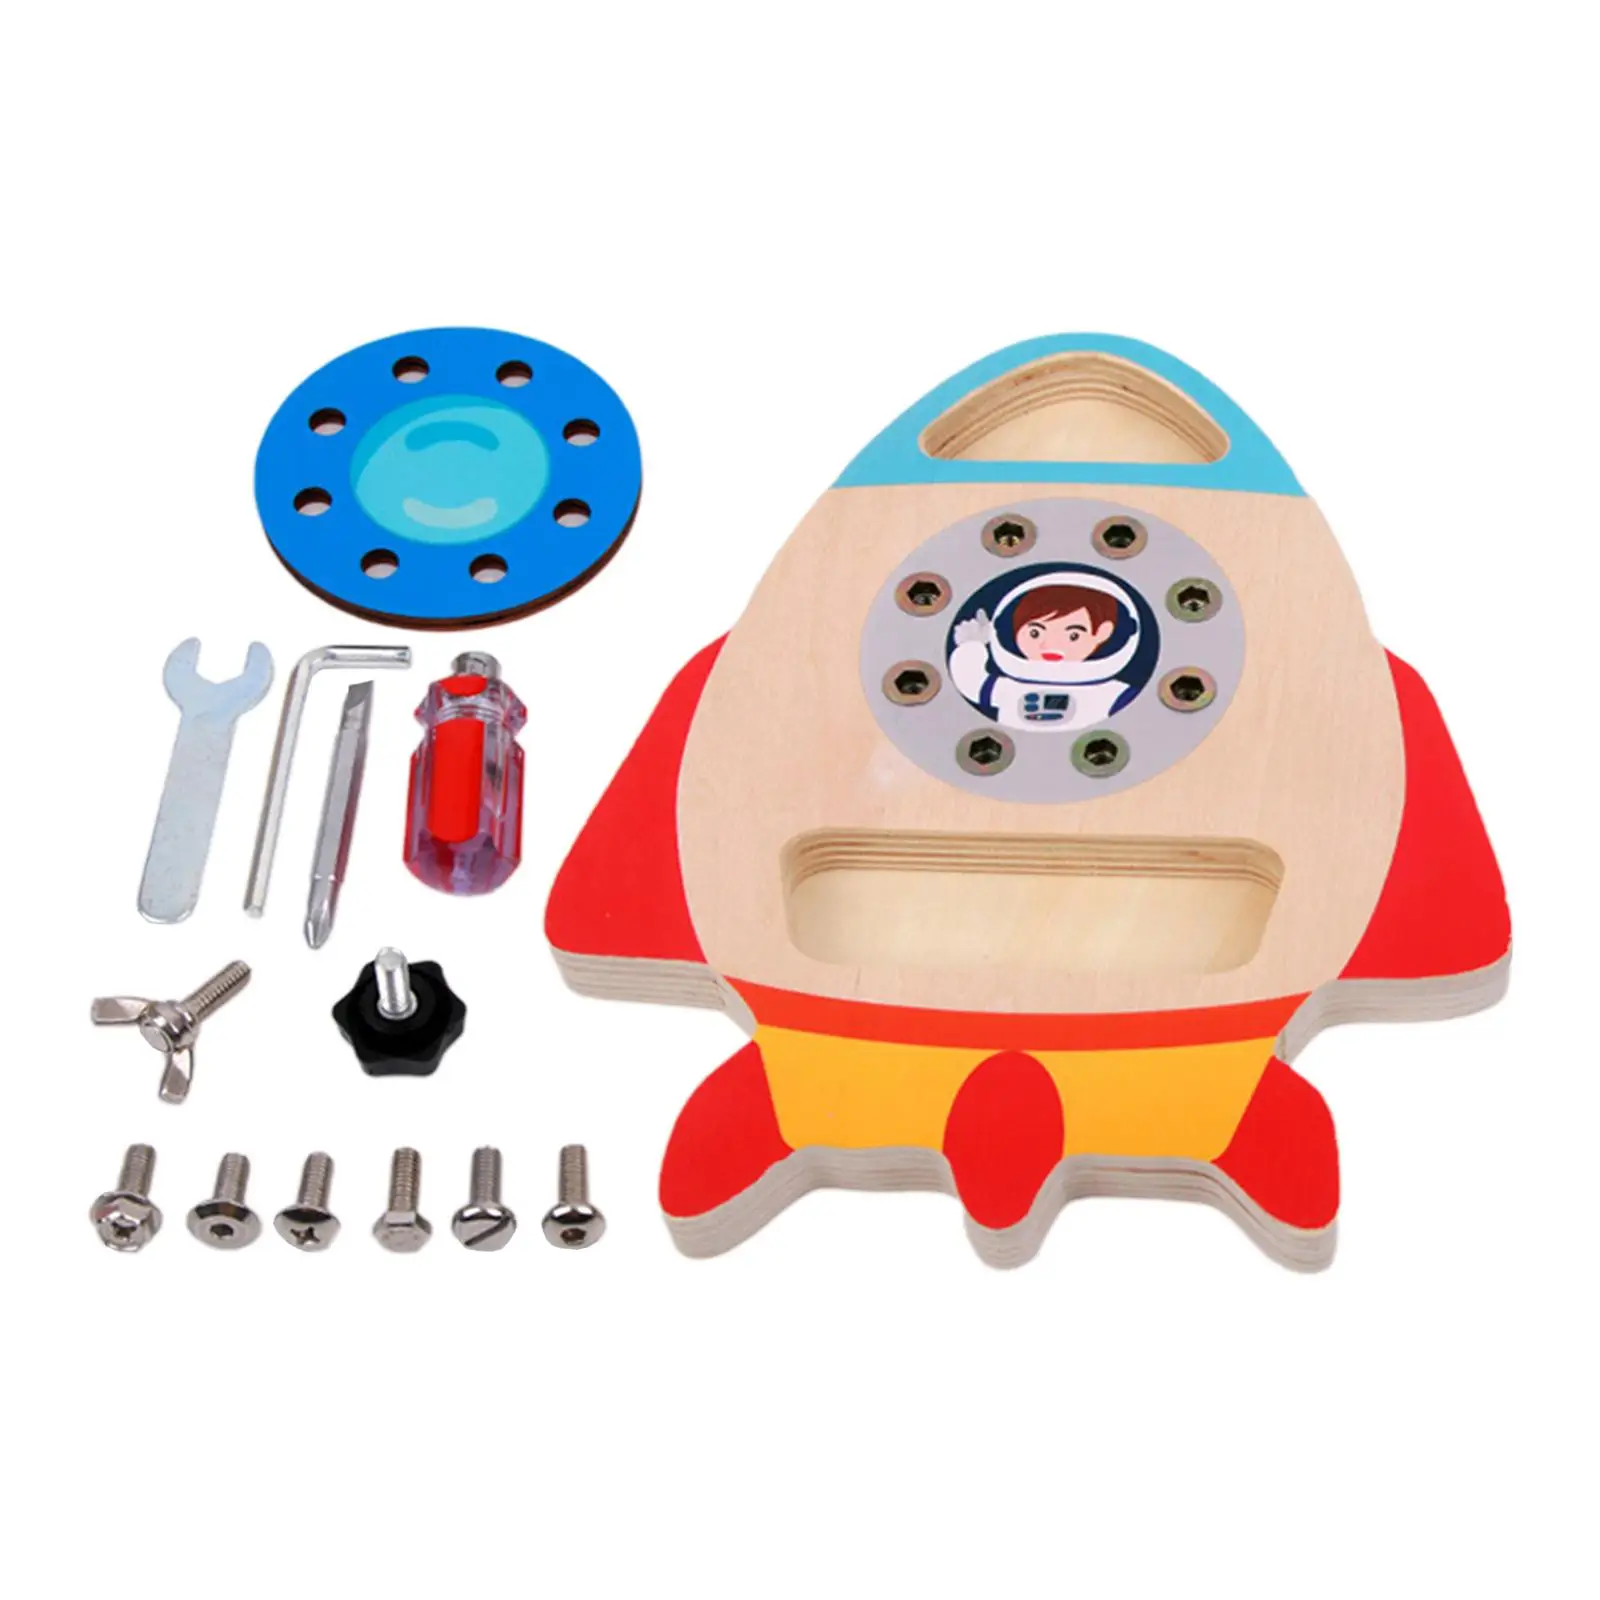 Montessori Rocket Shaped Screwdriver Board Set Educational Sensory Learning Toy Develop Fine Motor Skills for Children Kids Boy